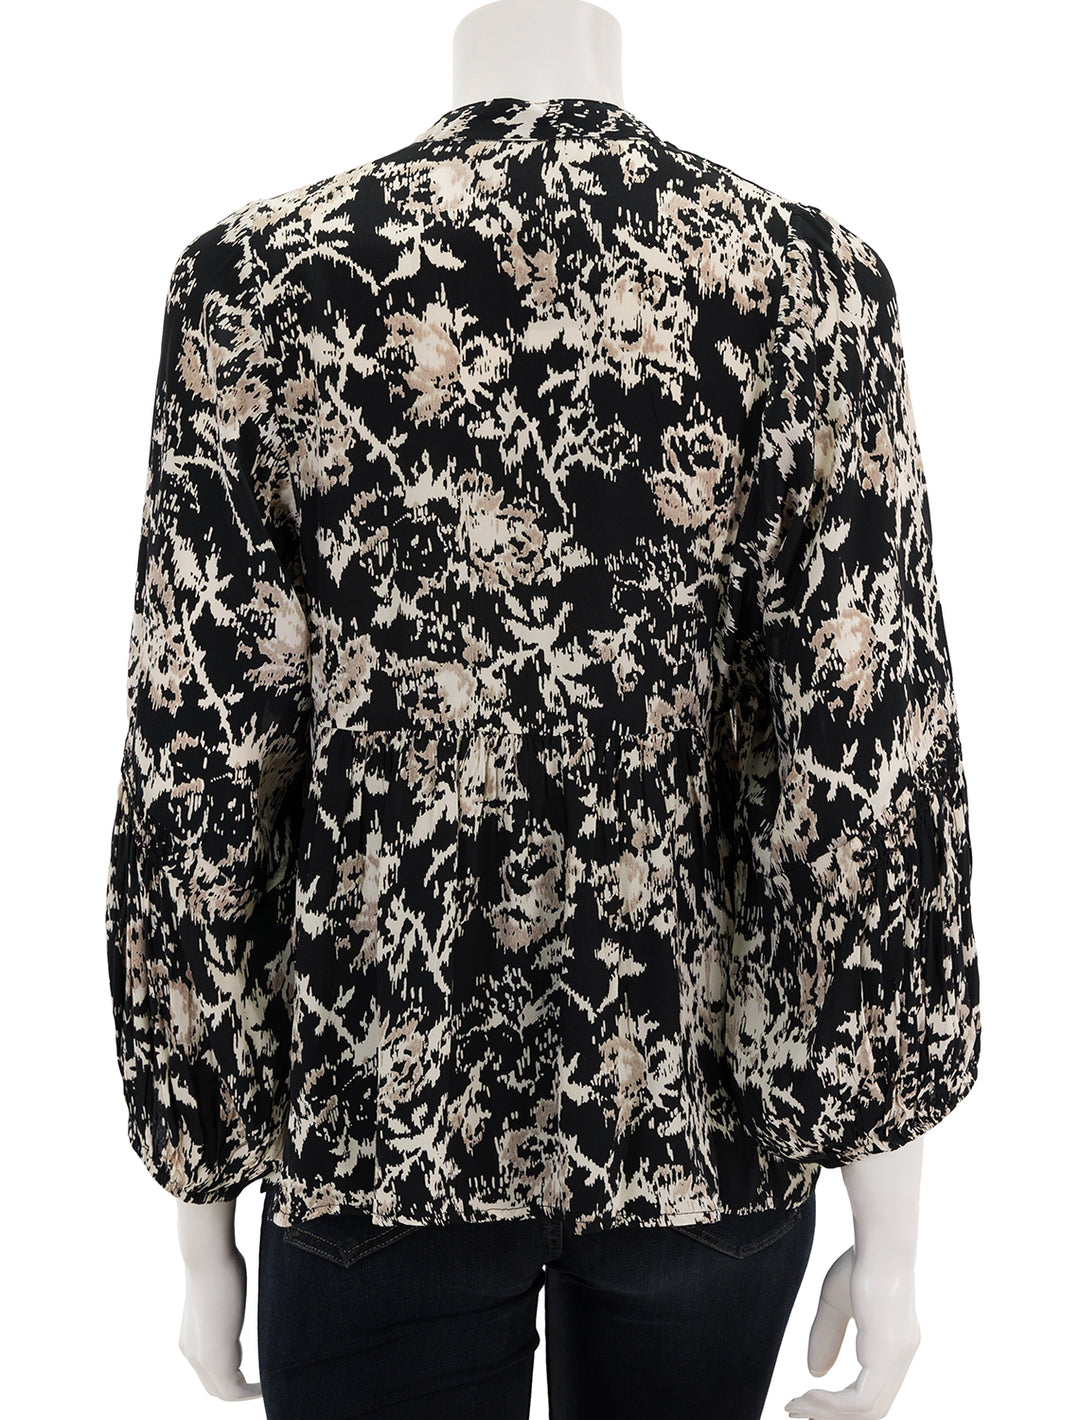 back view of baltik blouse in noir print